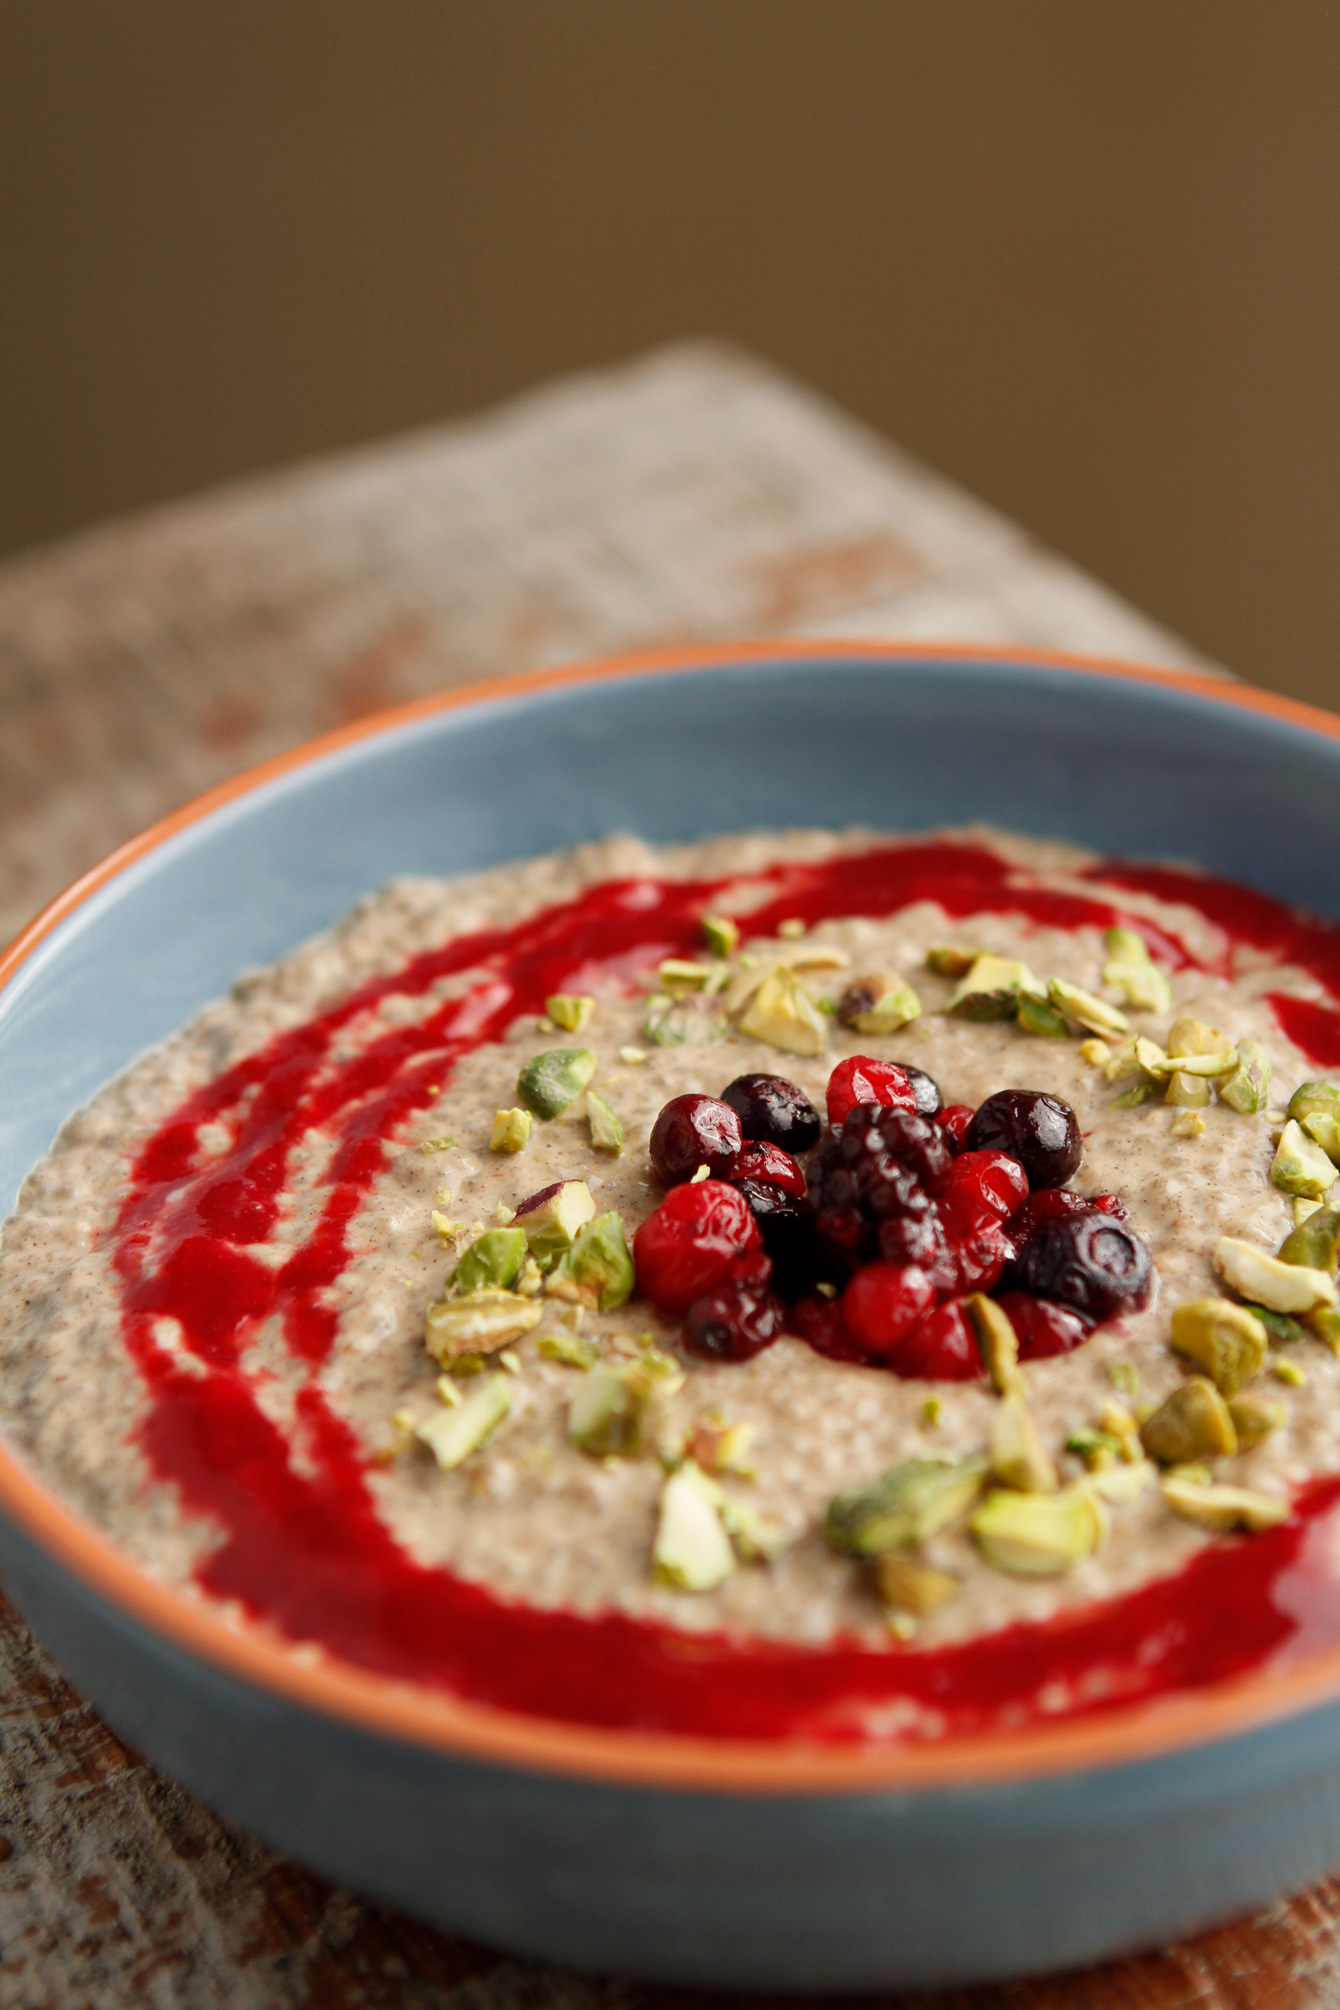 chia-seeds-porridge-vegan-breakfast-sadhana-kitchen-maz-valcorza